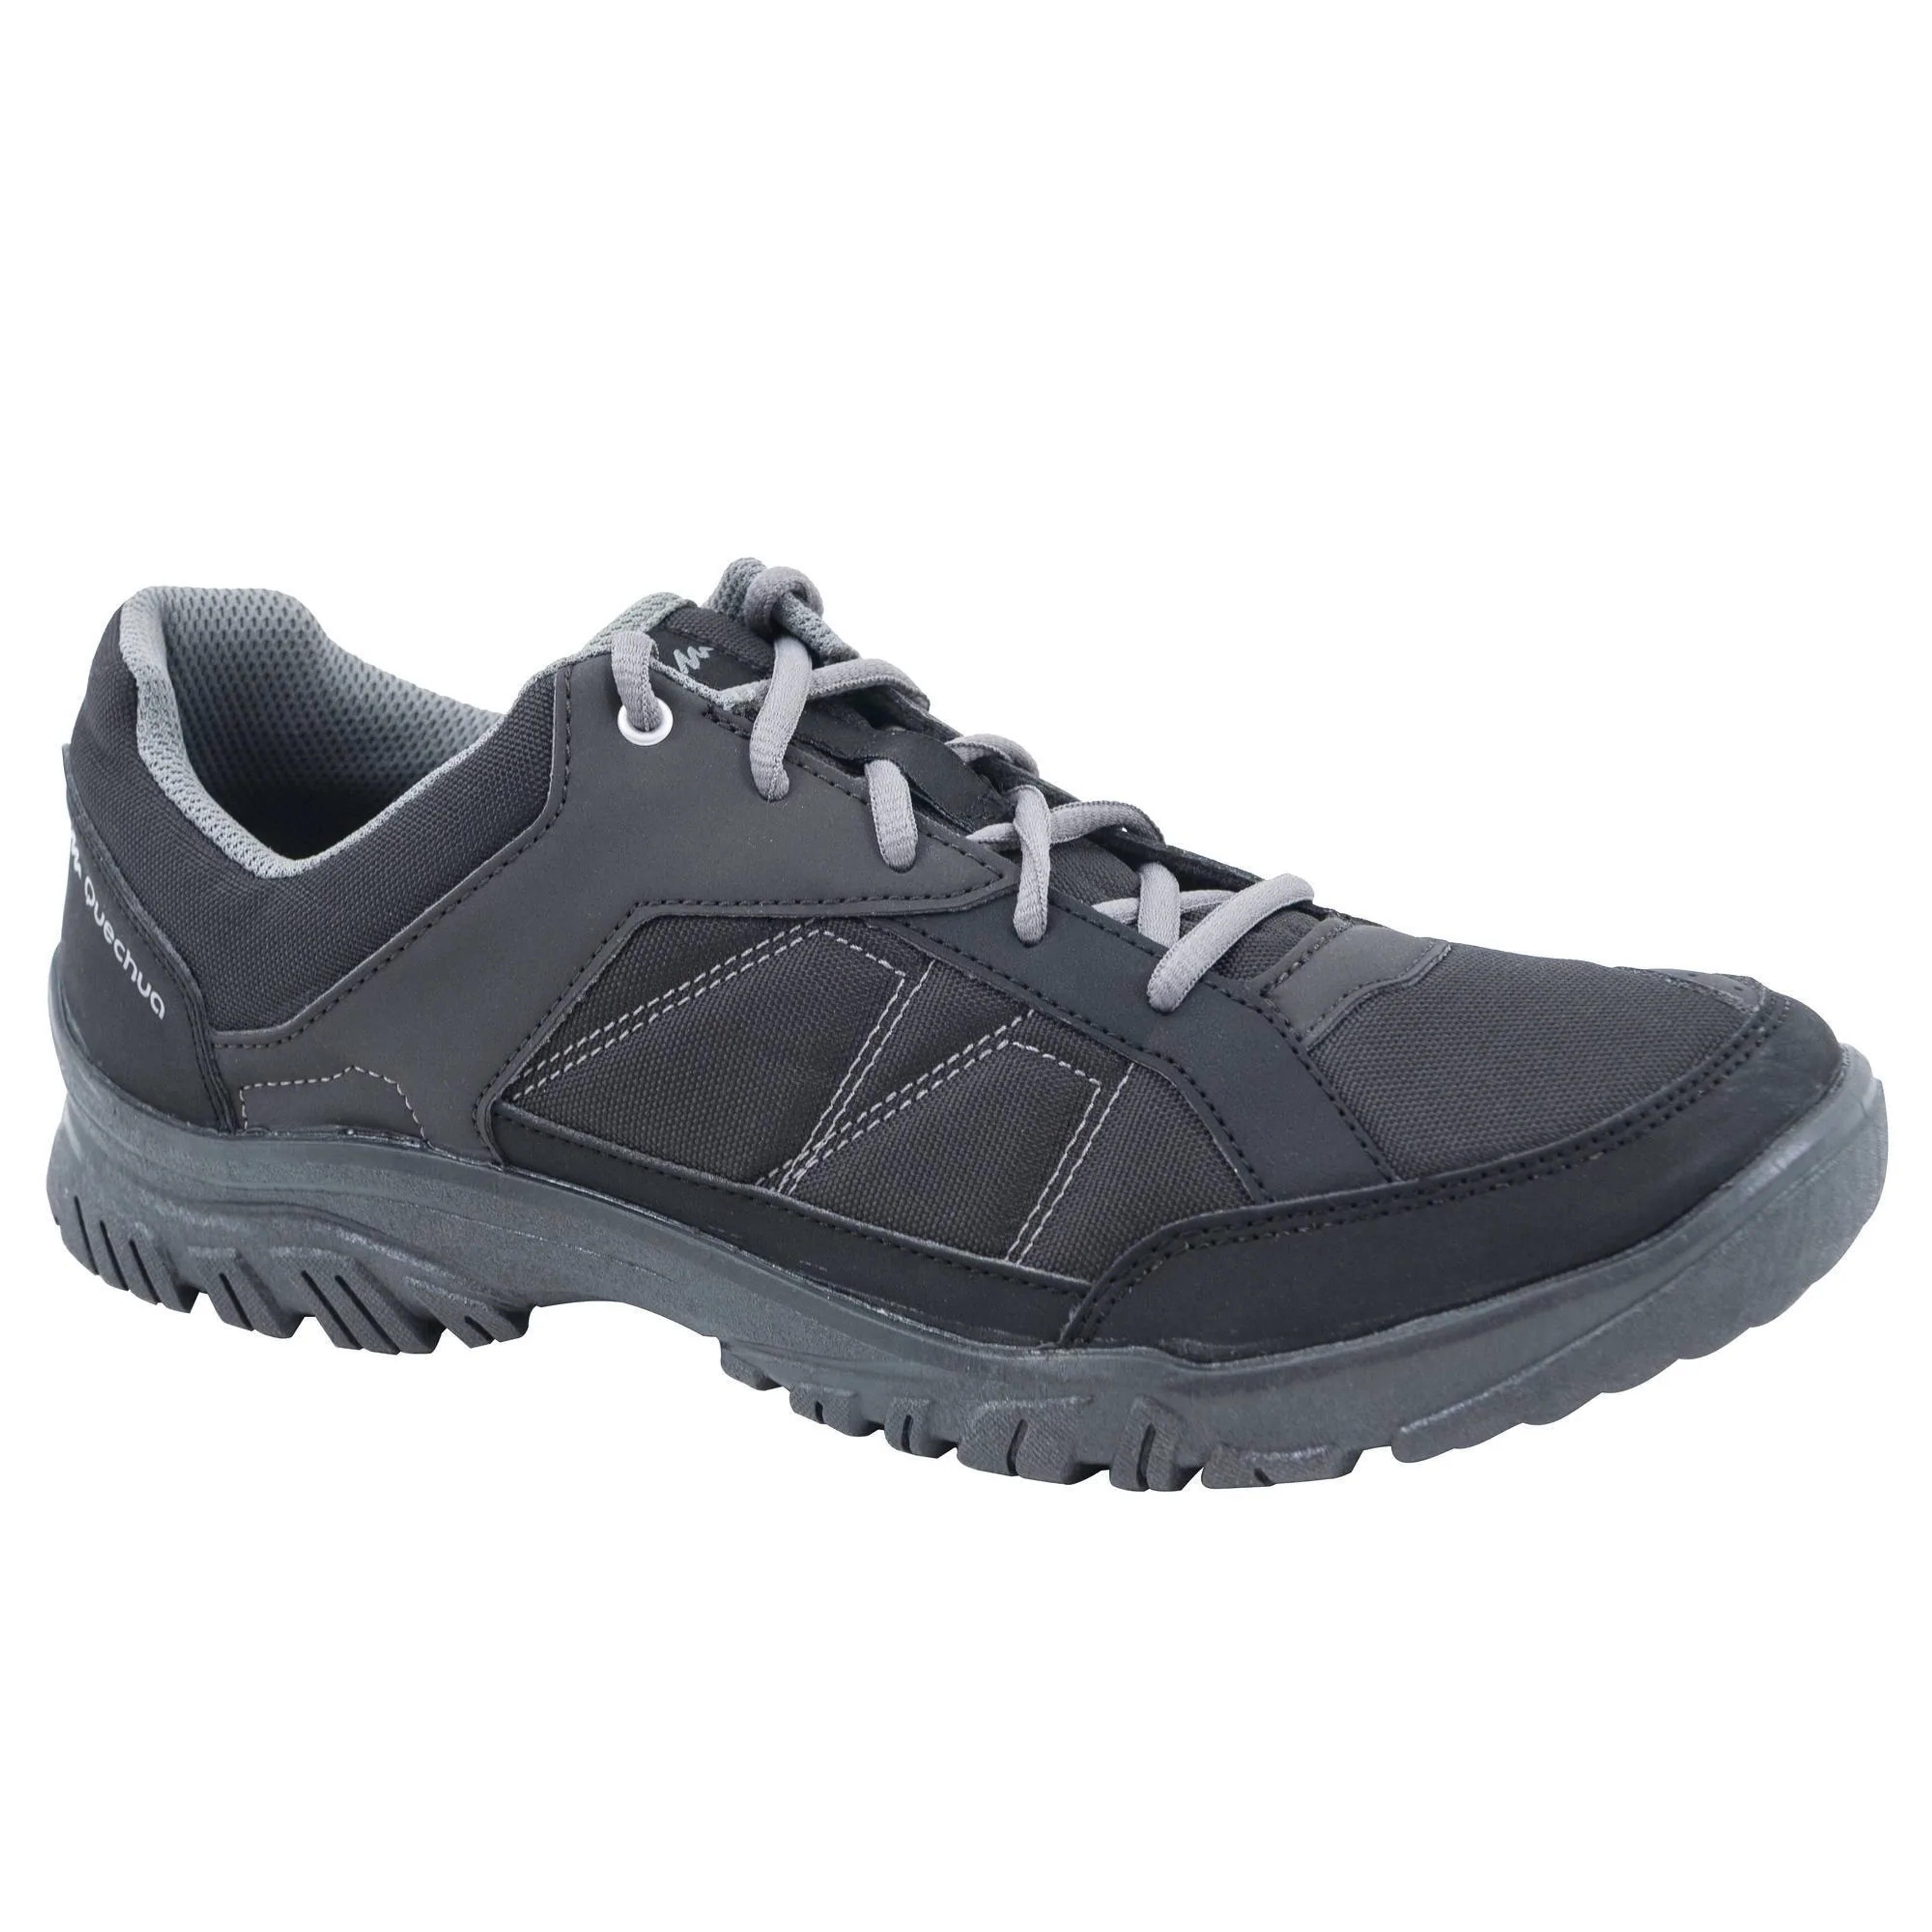 Quechua NH100, Hiking Shoes, Men's - Carbon Gray / 12 / 8354268